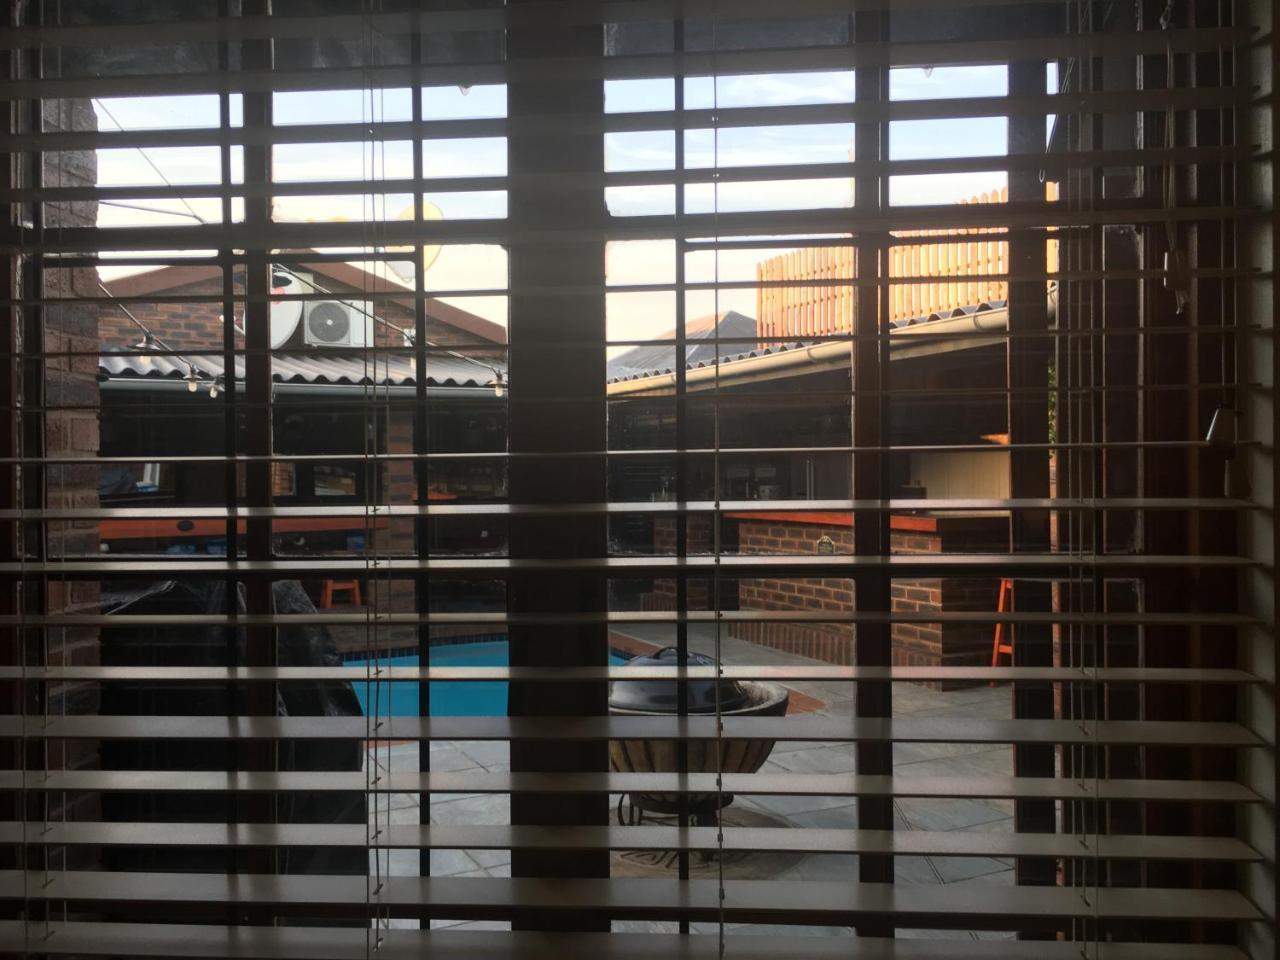 The Travel Inn Durban Exterior photo